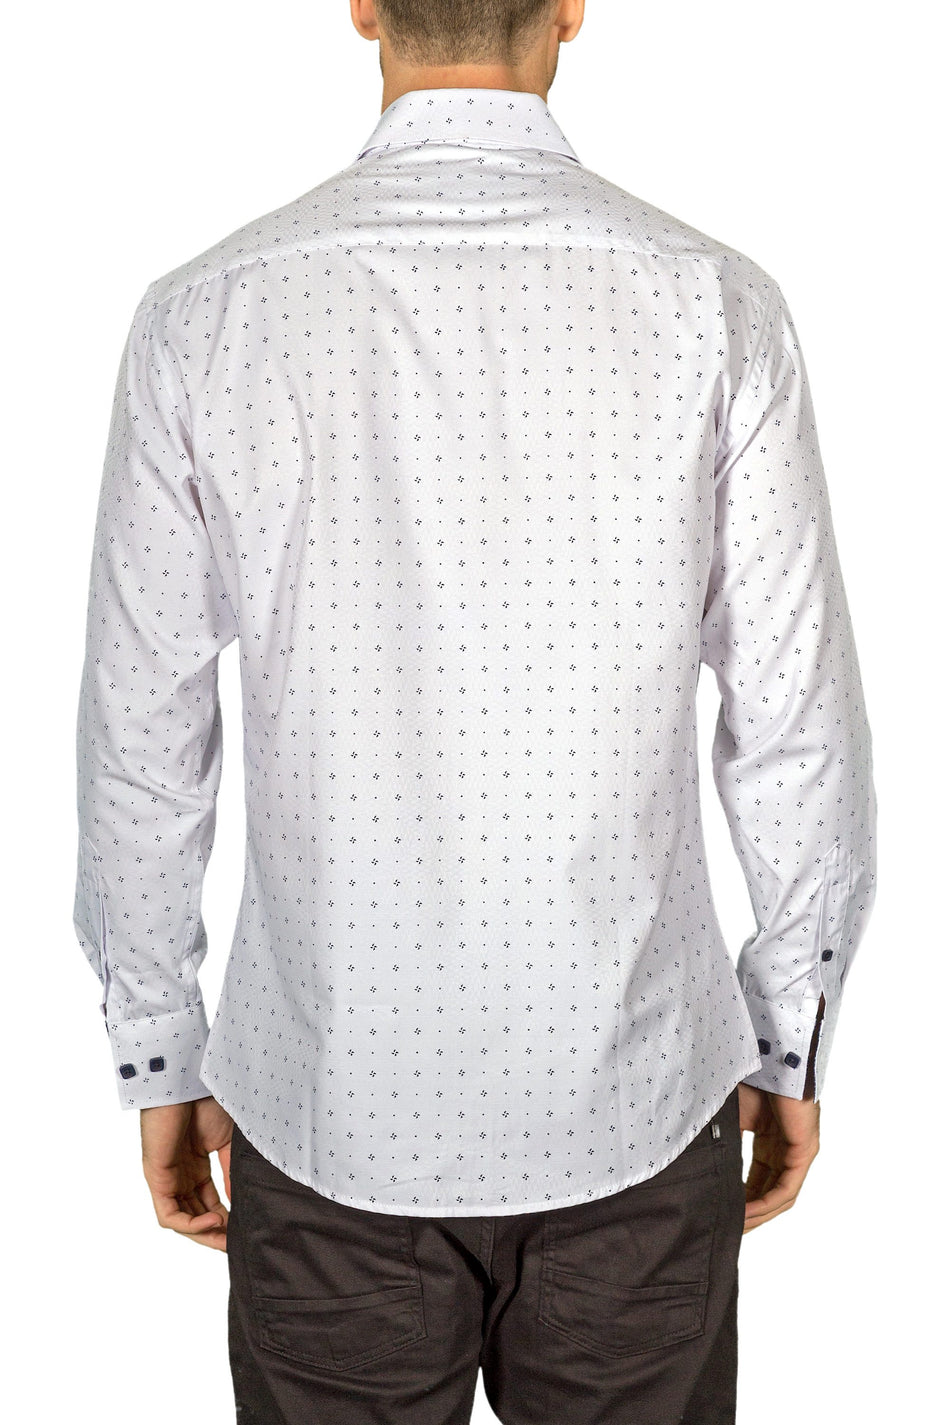 Men's Modern Fit Cotton Button Up White Pattern